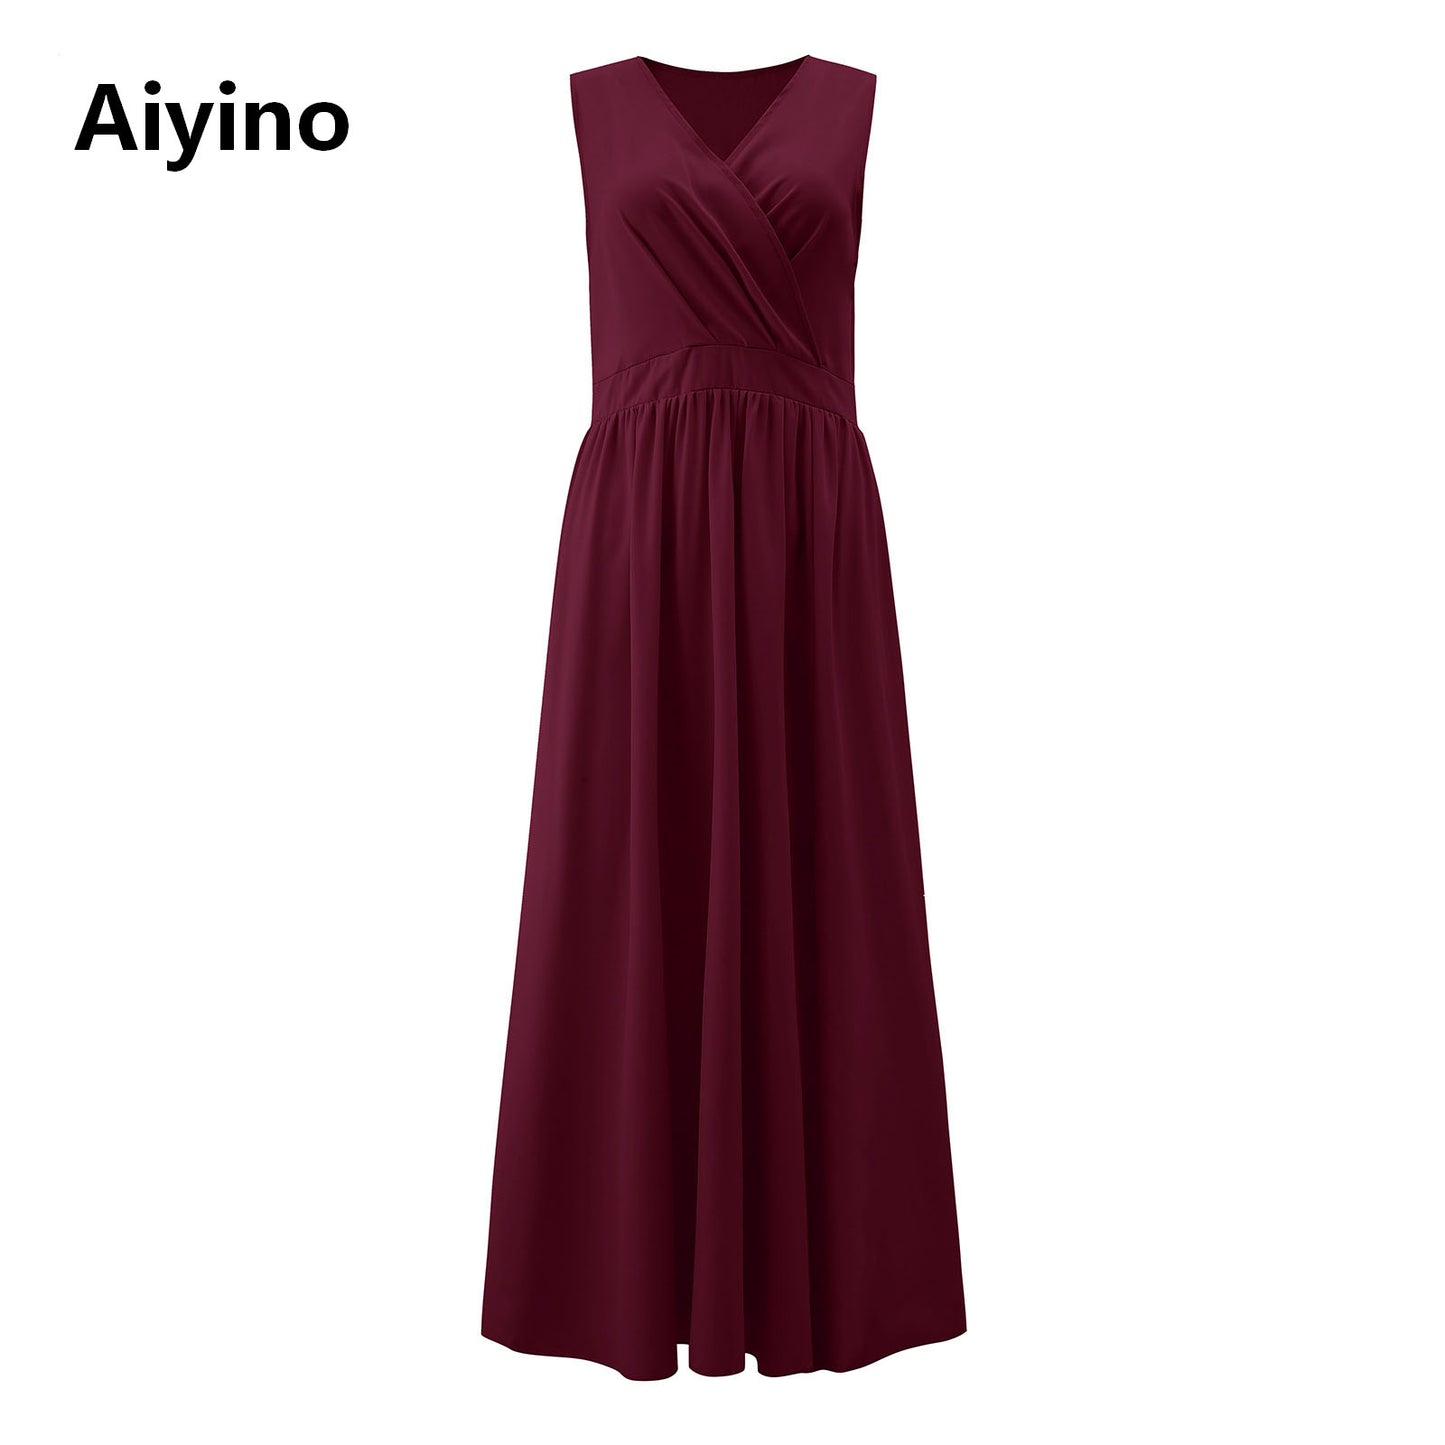 Aiyino Women's V-neck Chiffon Sleeveless High Waist Split Dress Dresses